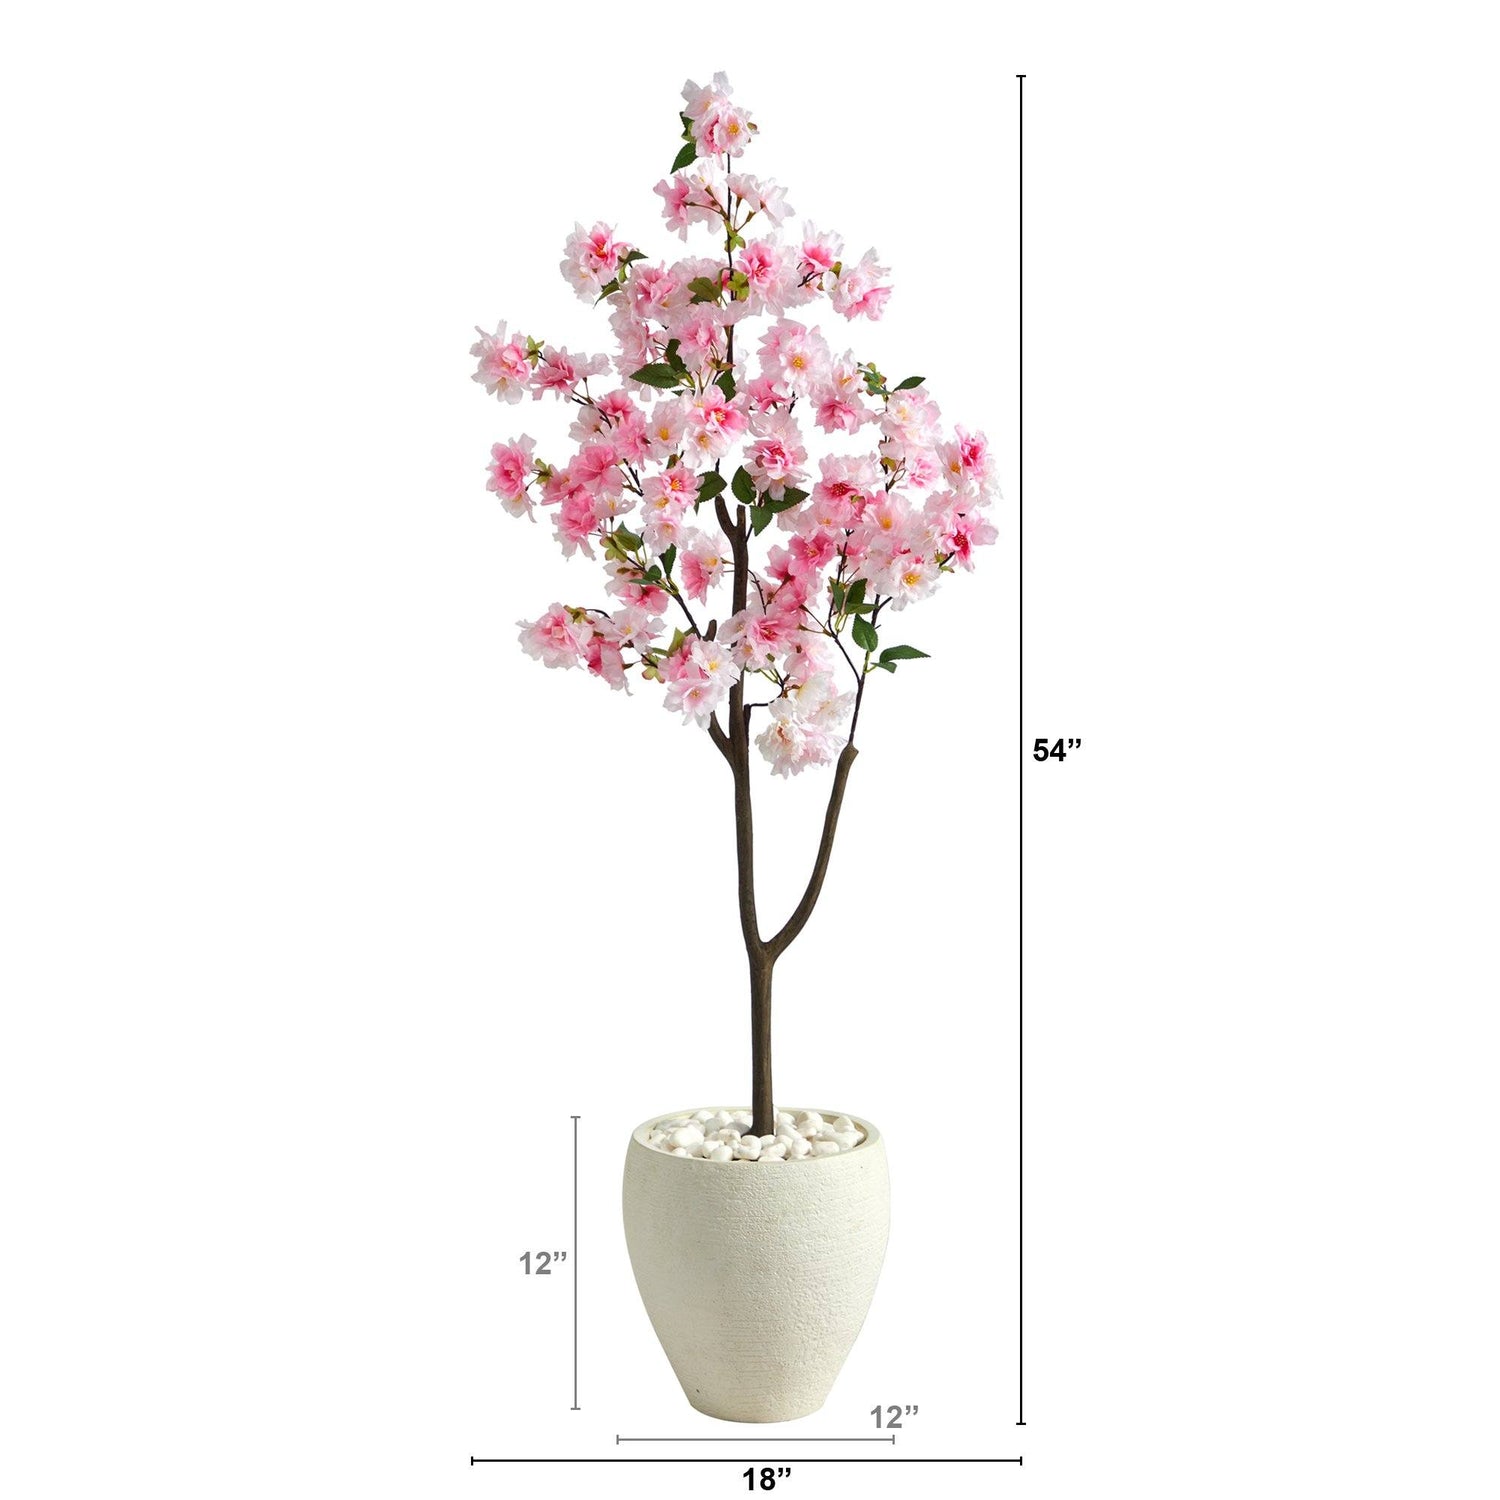 4.5’ Cherry Blossom Artificial Tree in White Planter